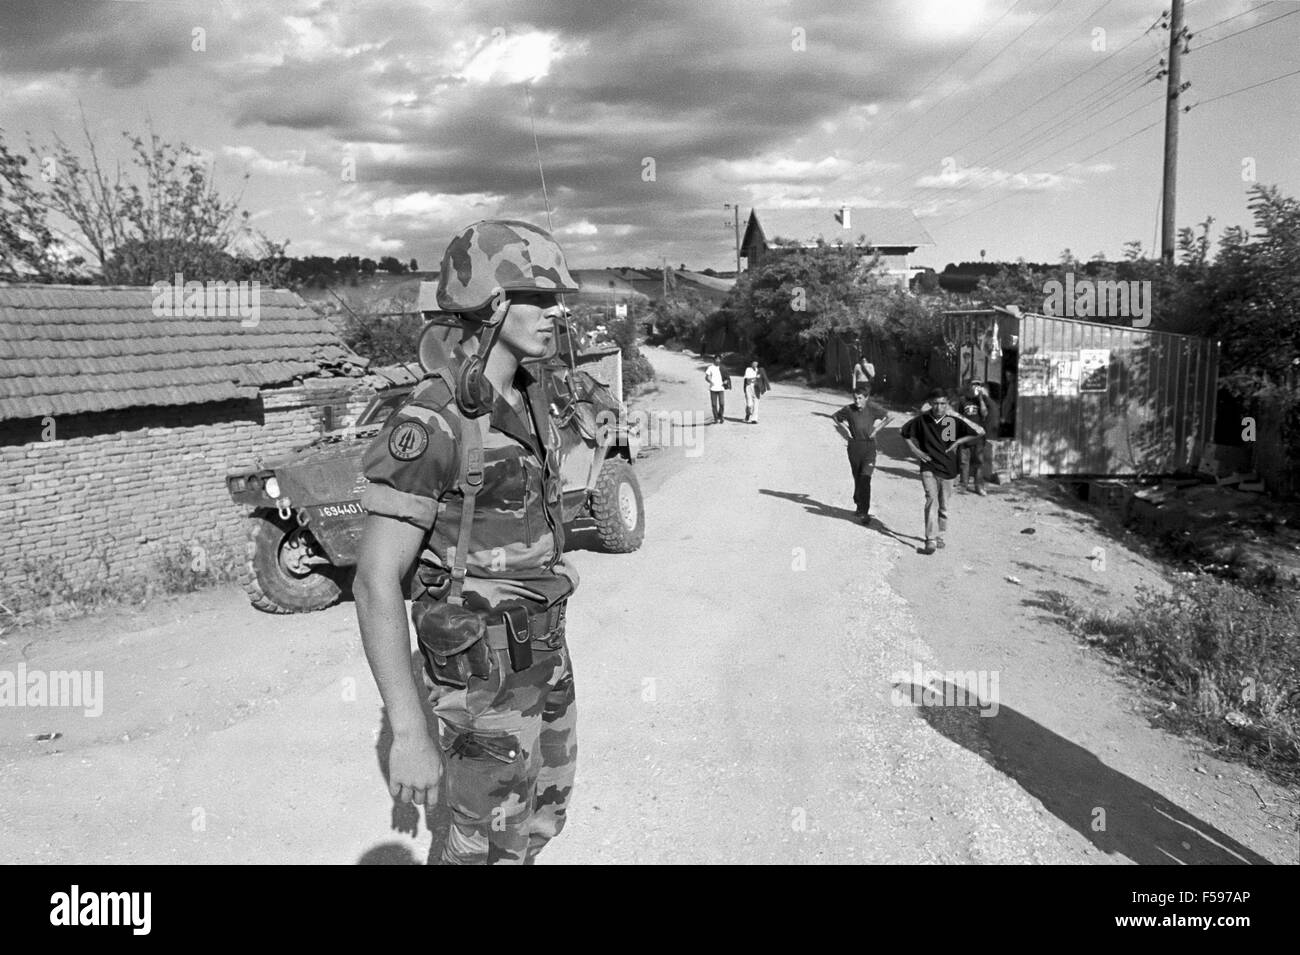 NATO intervention in Kosovo, July 2000, checkpoint of the French army near Mitroviza town Stock Photo